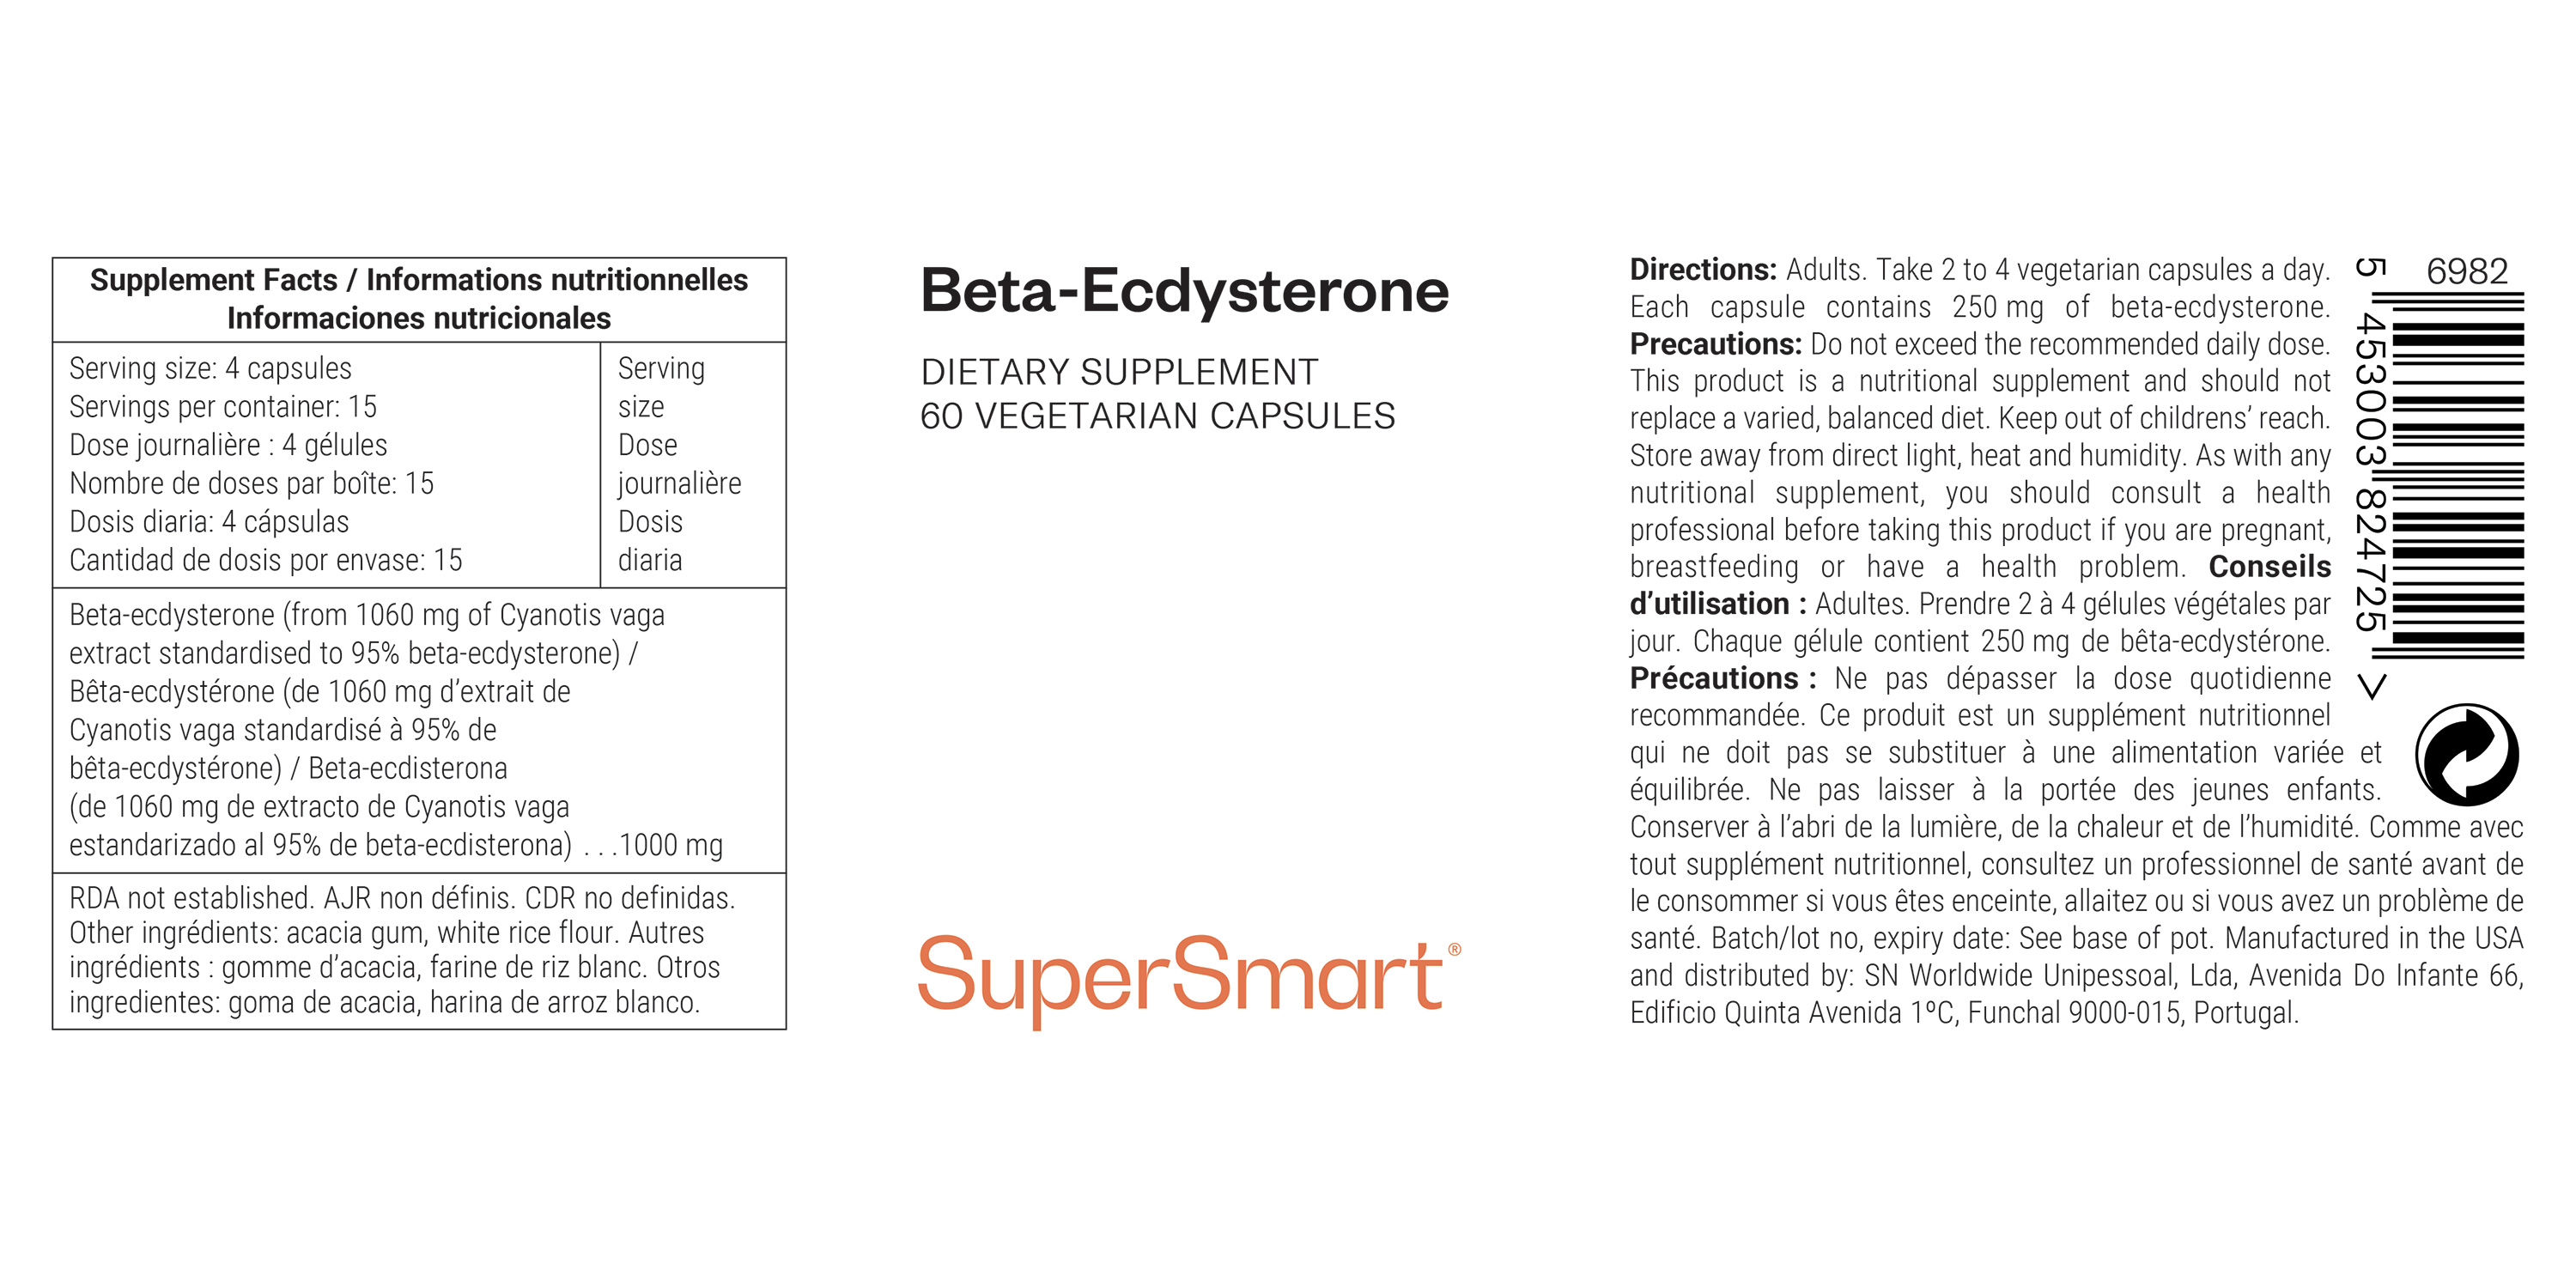 Beta-Ecdysterone 265 mg